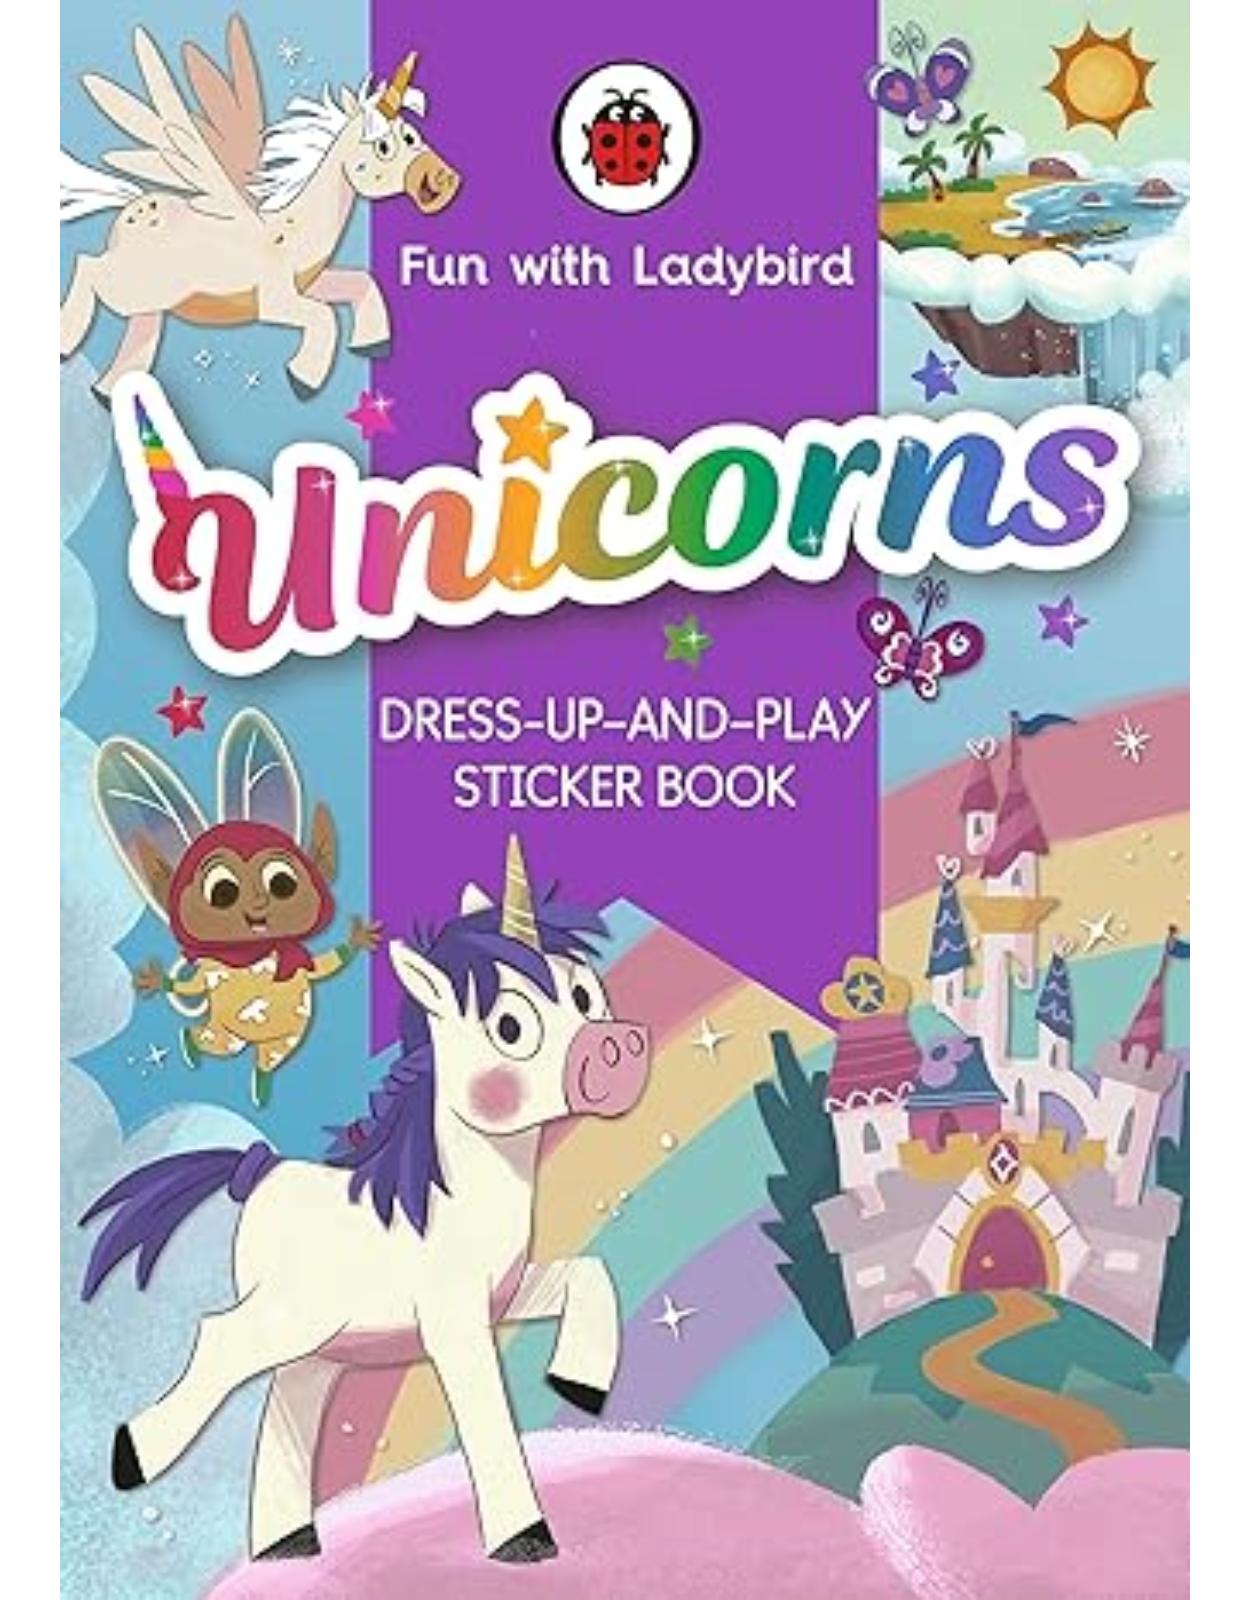 Fun with Ladybird: Dress-Up-And-Play Sticker Book: Unicorns